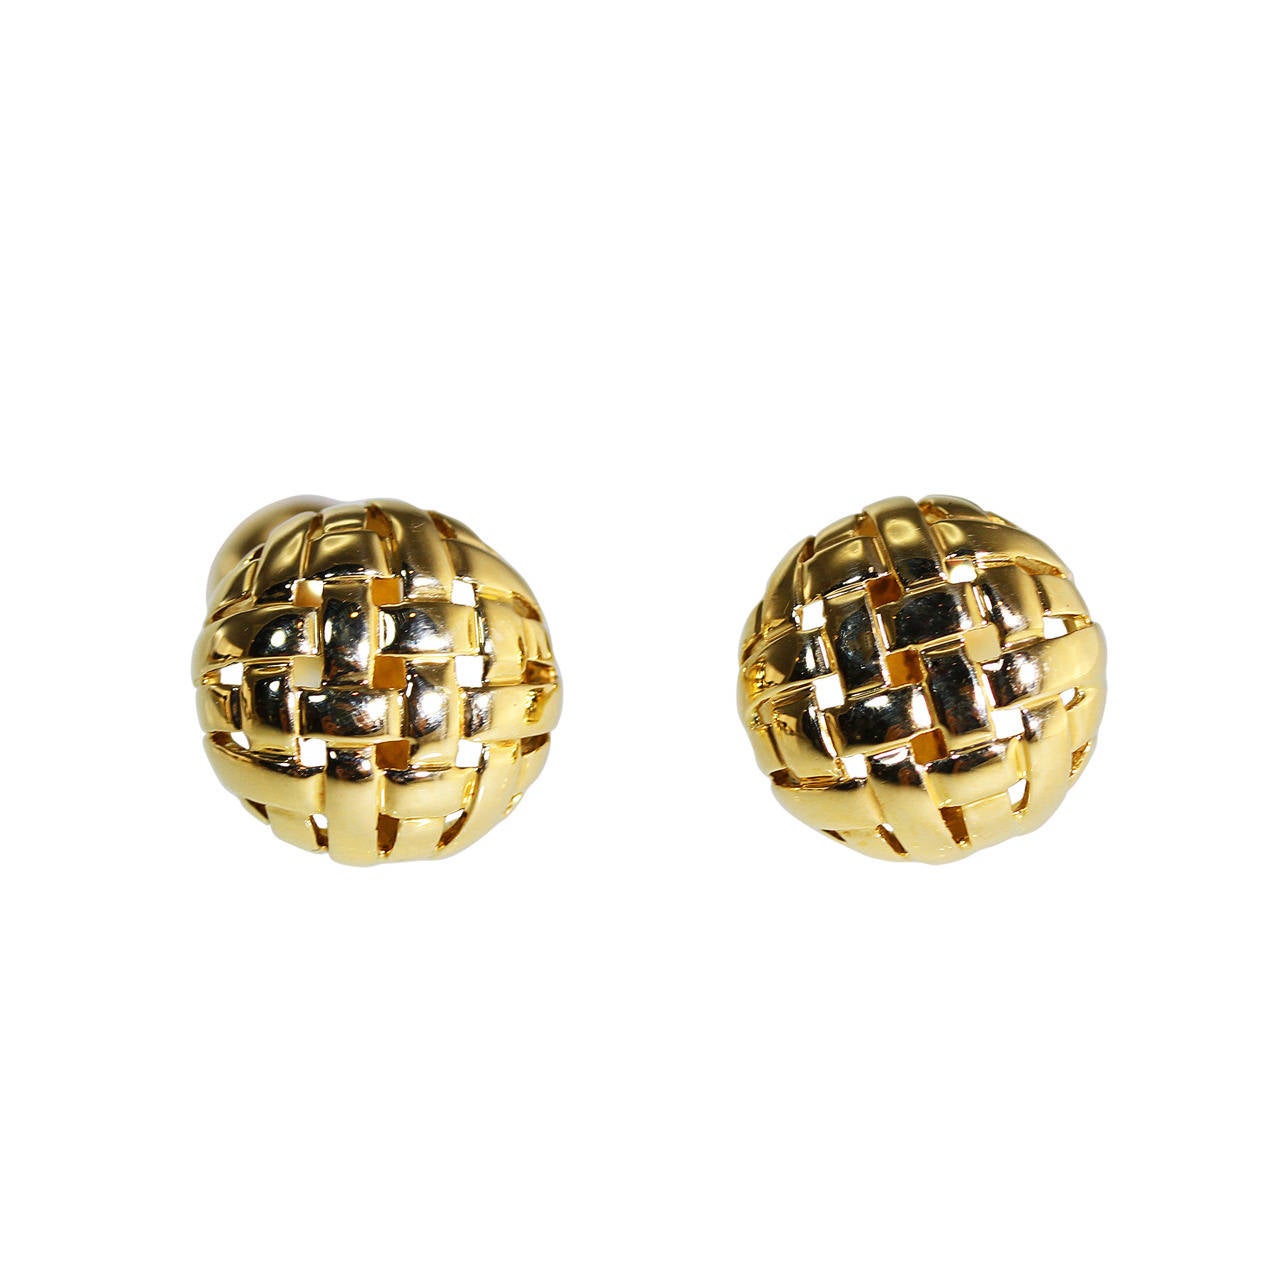 1995 Tiffany & Co. Gold Weave Cufflinks